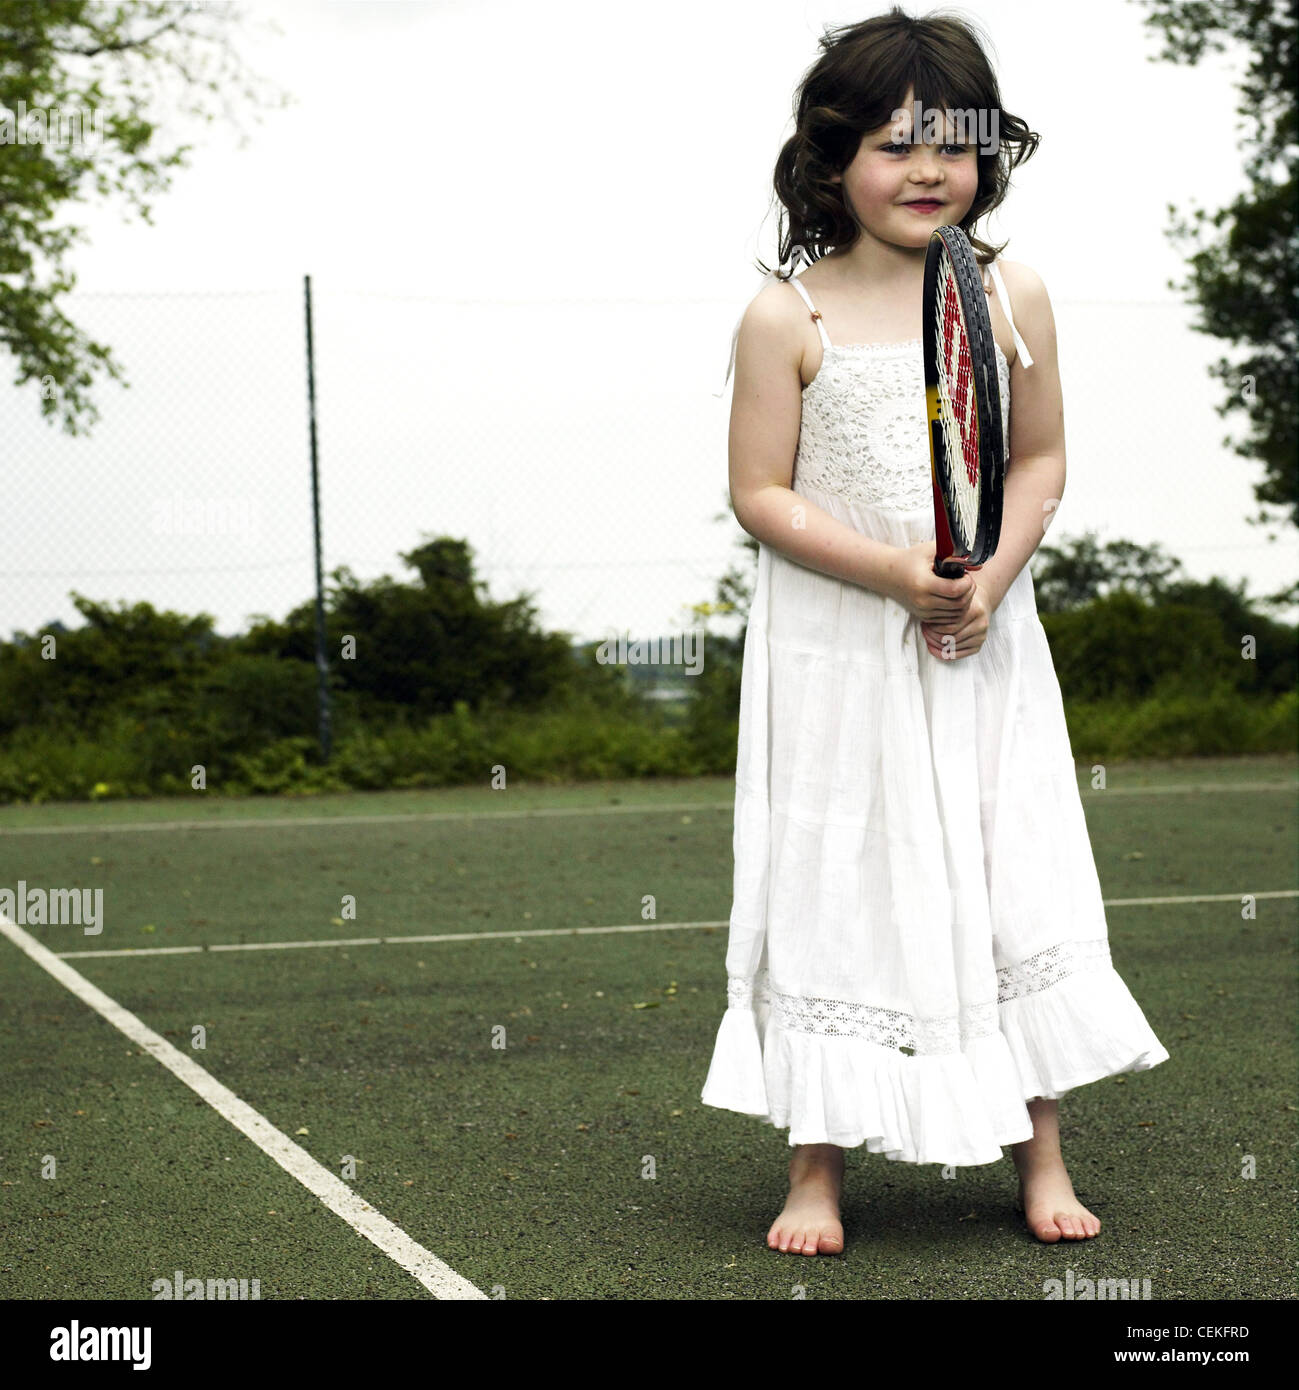 Niña vestidos de largo vestido blanco pie la pista de tenis sosteniendo la raqueta de tenis Fotografía de stock - Alamy